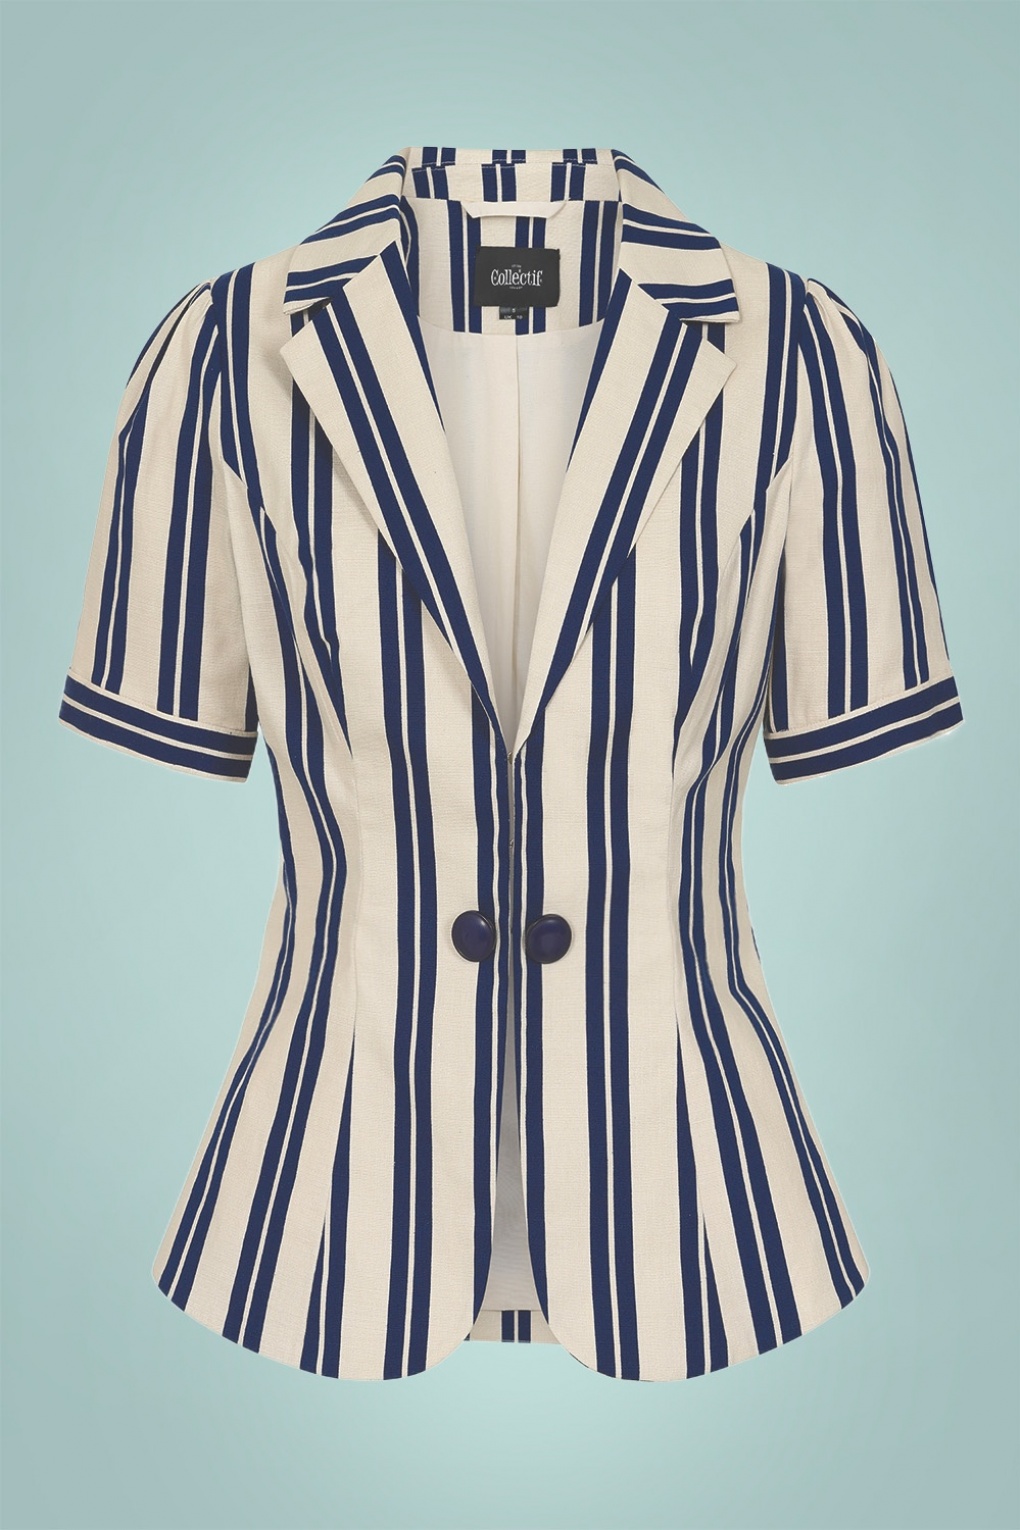 Ga door het is mooi Roestig Collectif Clothing | Cyra Admiral Stripe Jacket in Cream